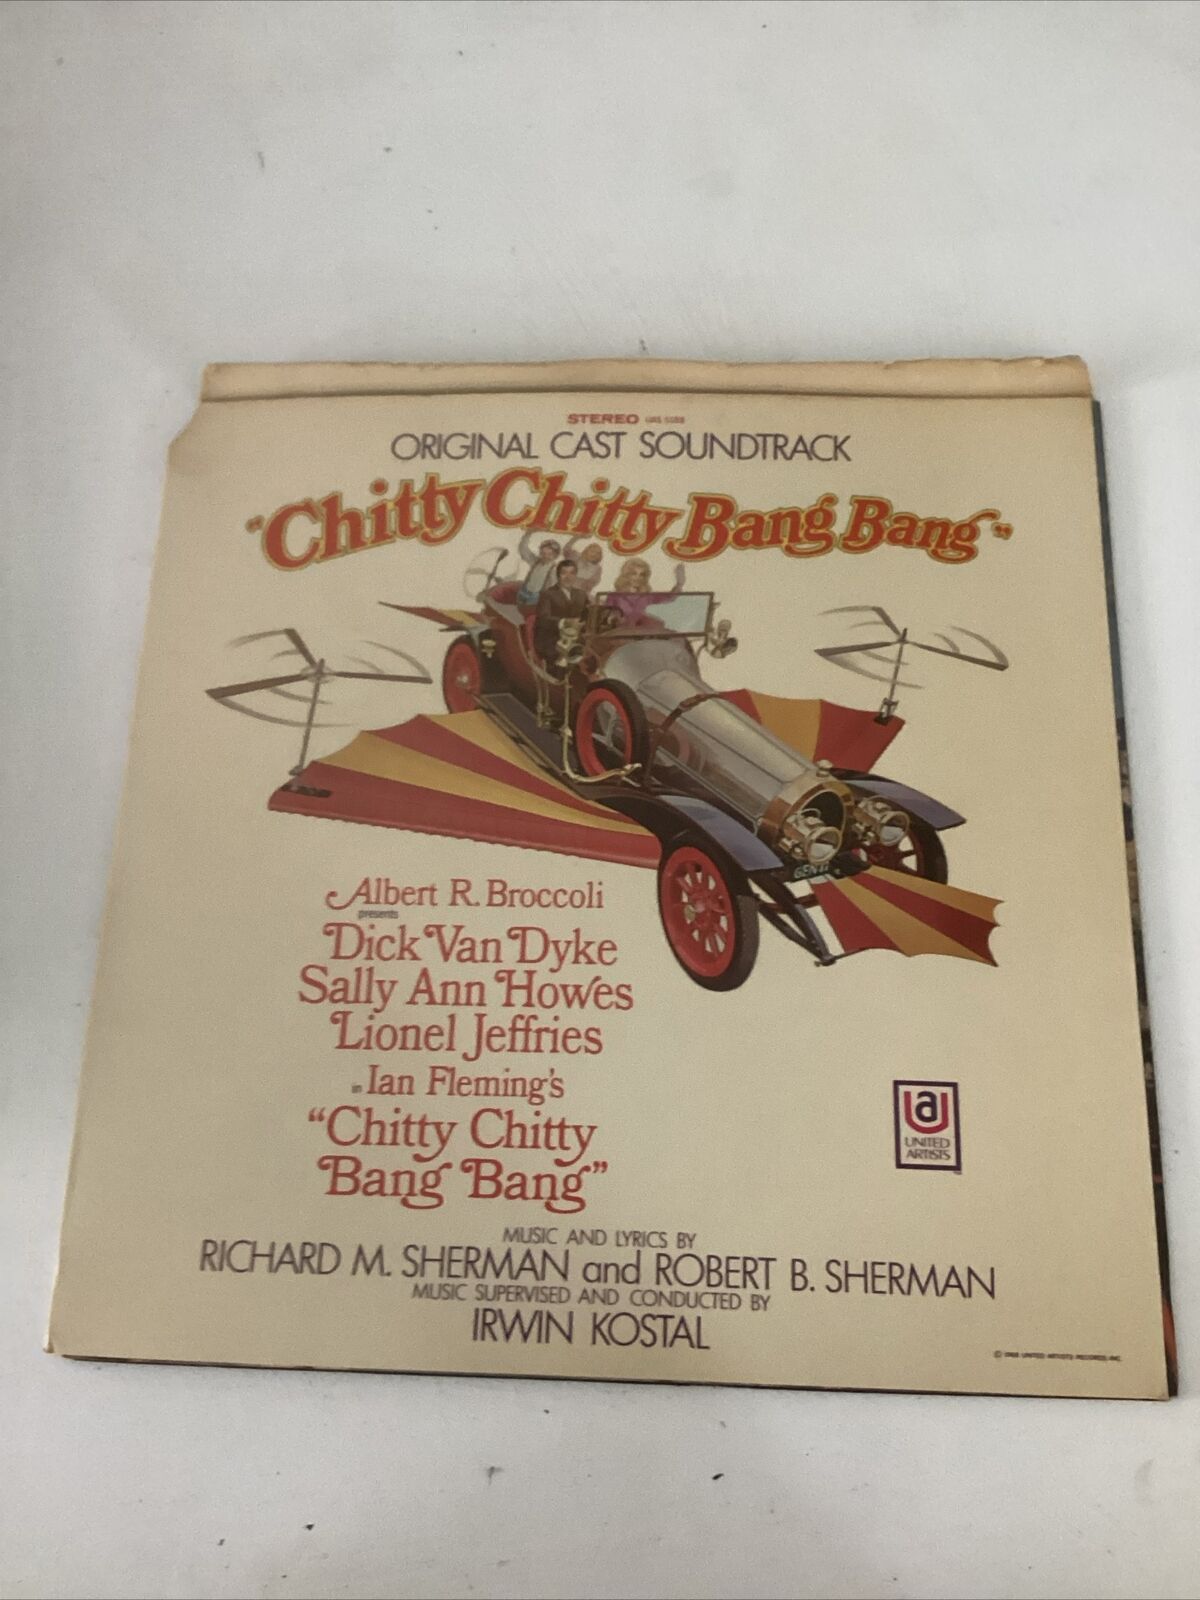 VTG Chitty Chitty Bang Bang Original Cast Soundtrack 33rpm VINYL LP Record 1968